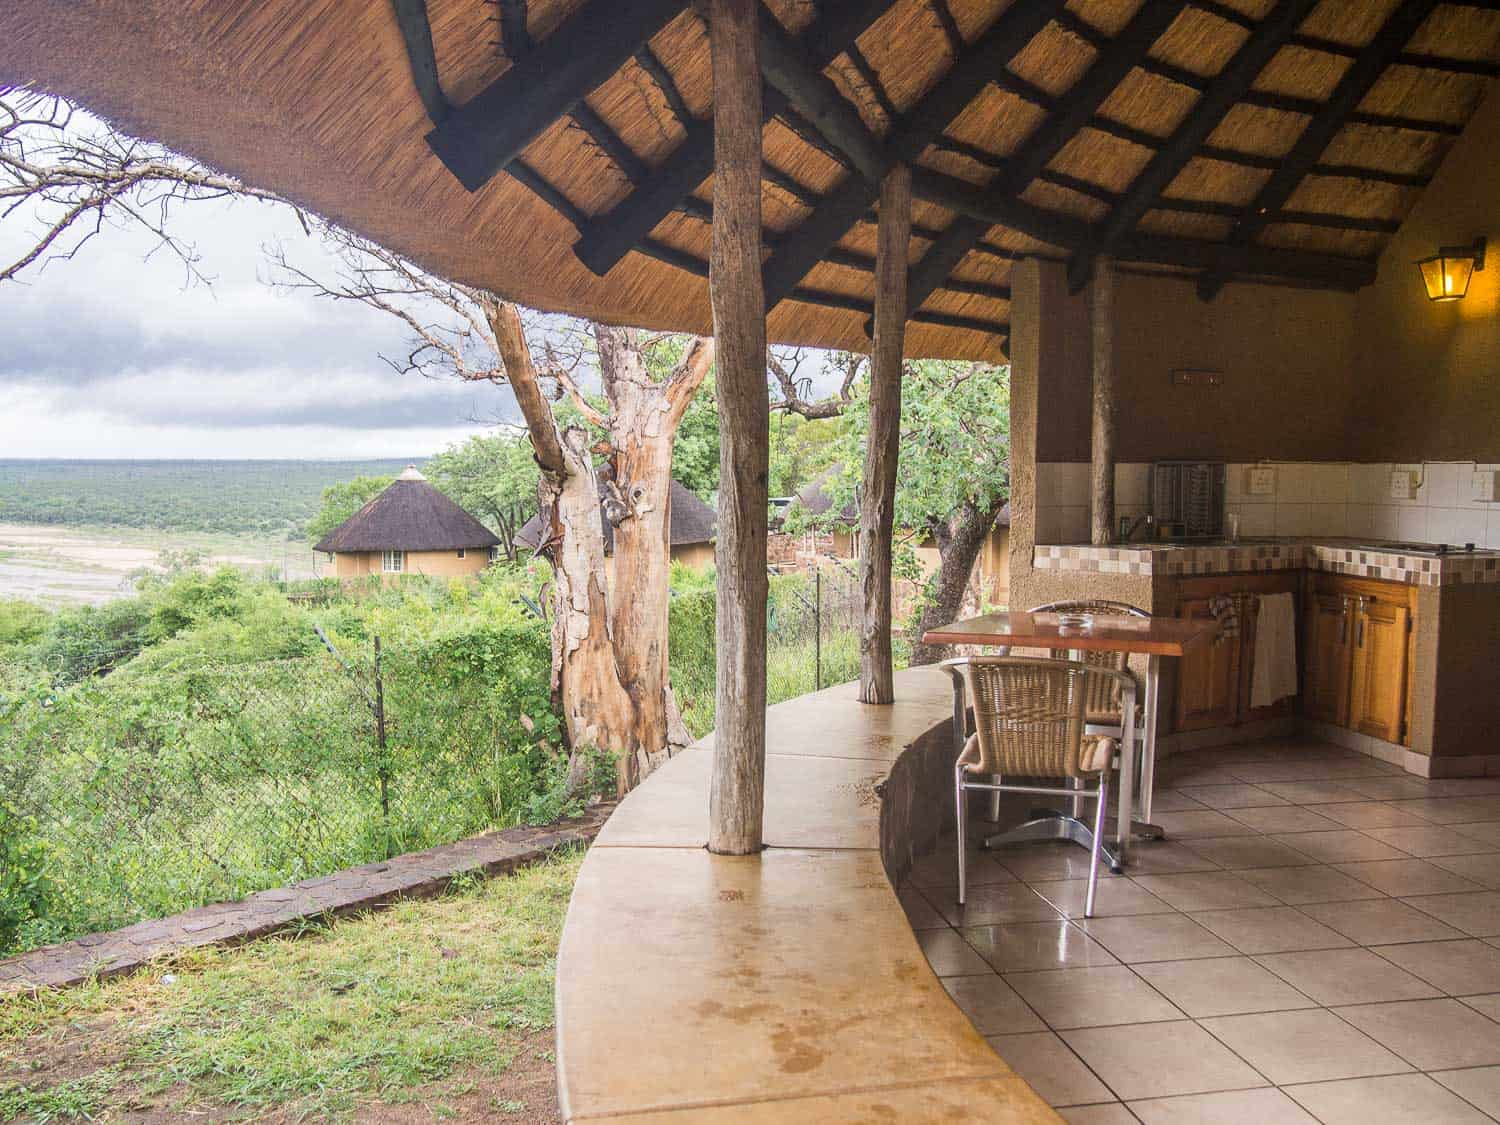 Our outdoor kitchen at Olifants in Kruger National Park